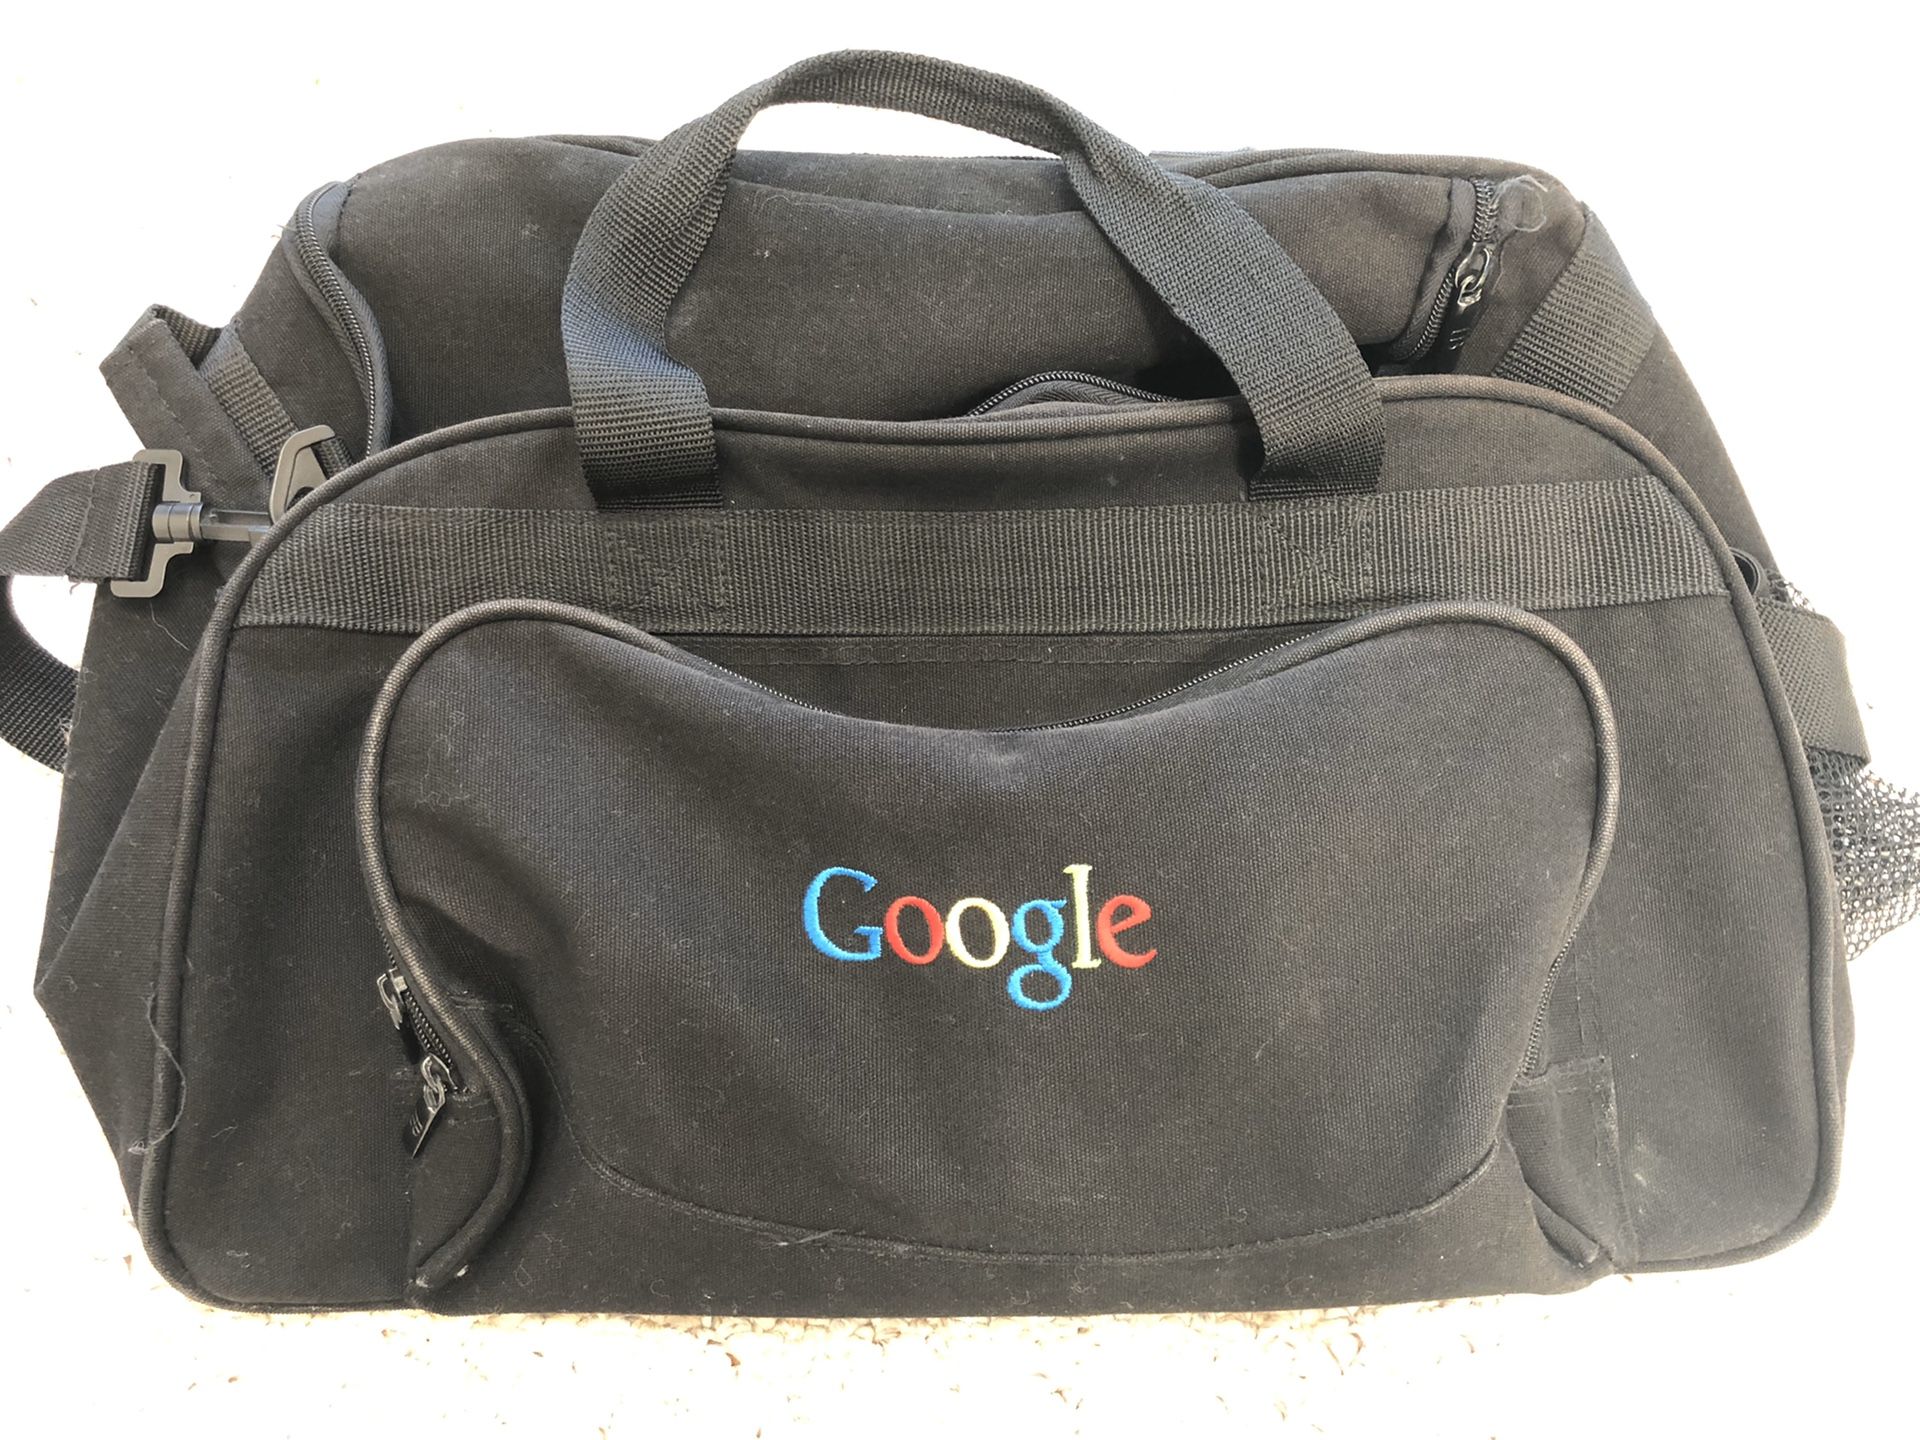 Google Duffle Bag